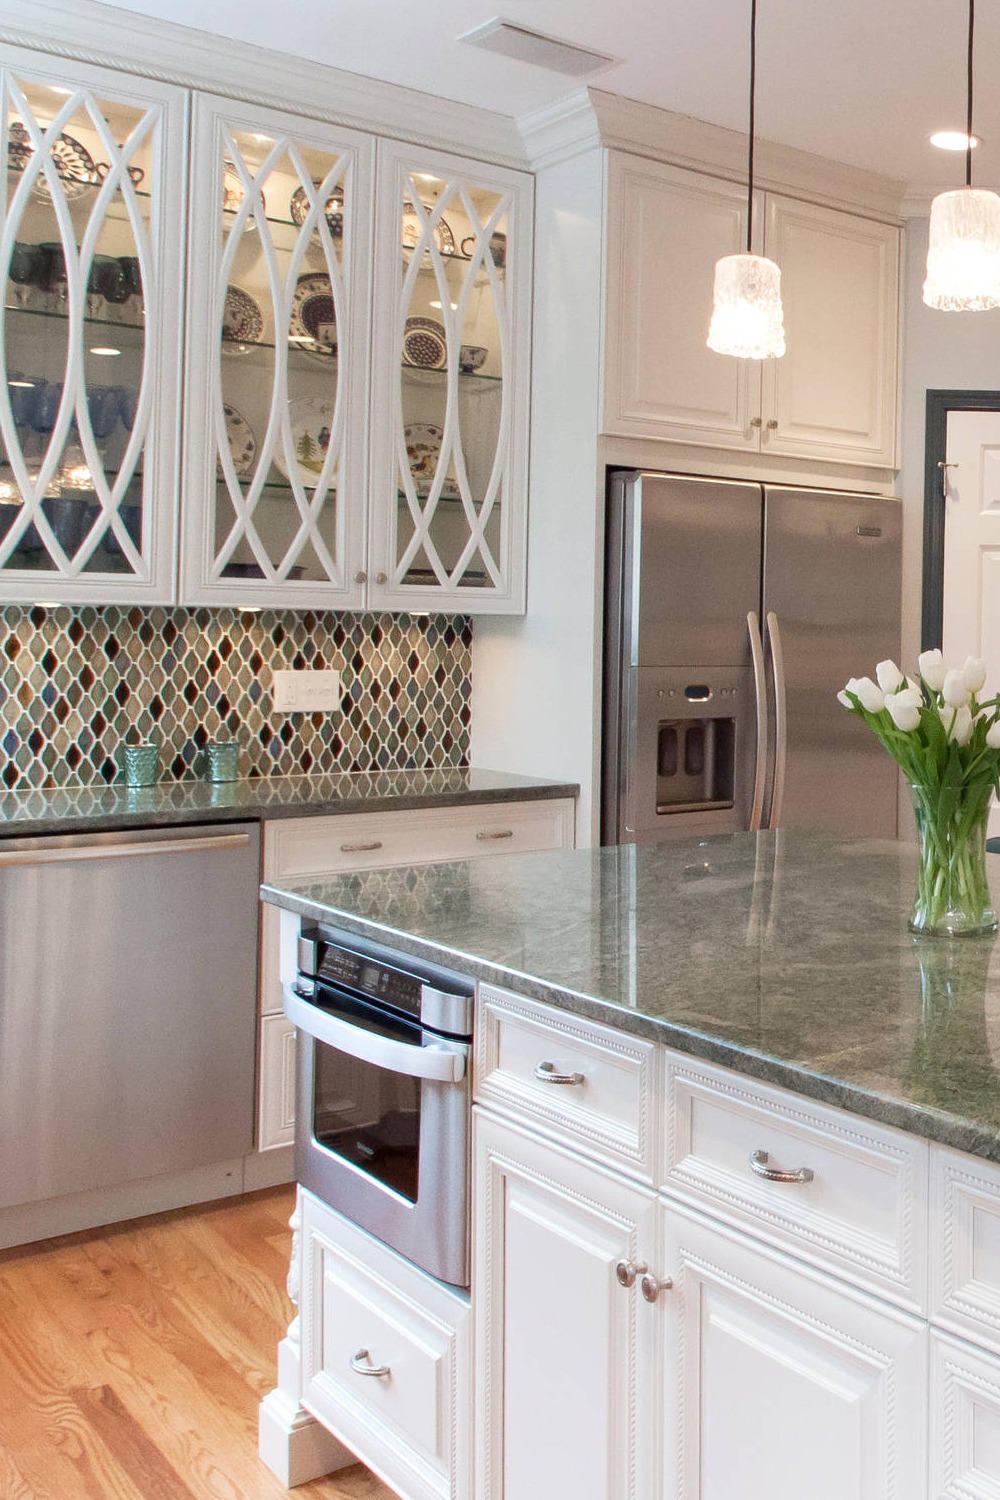 Green Granite Countertops Mosaic Tile Backsplash Hardwood Floor Pendant Lighting